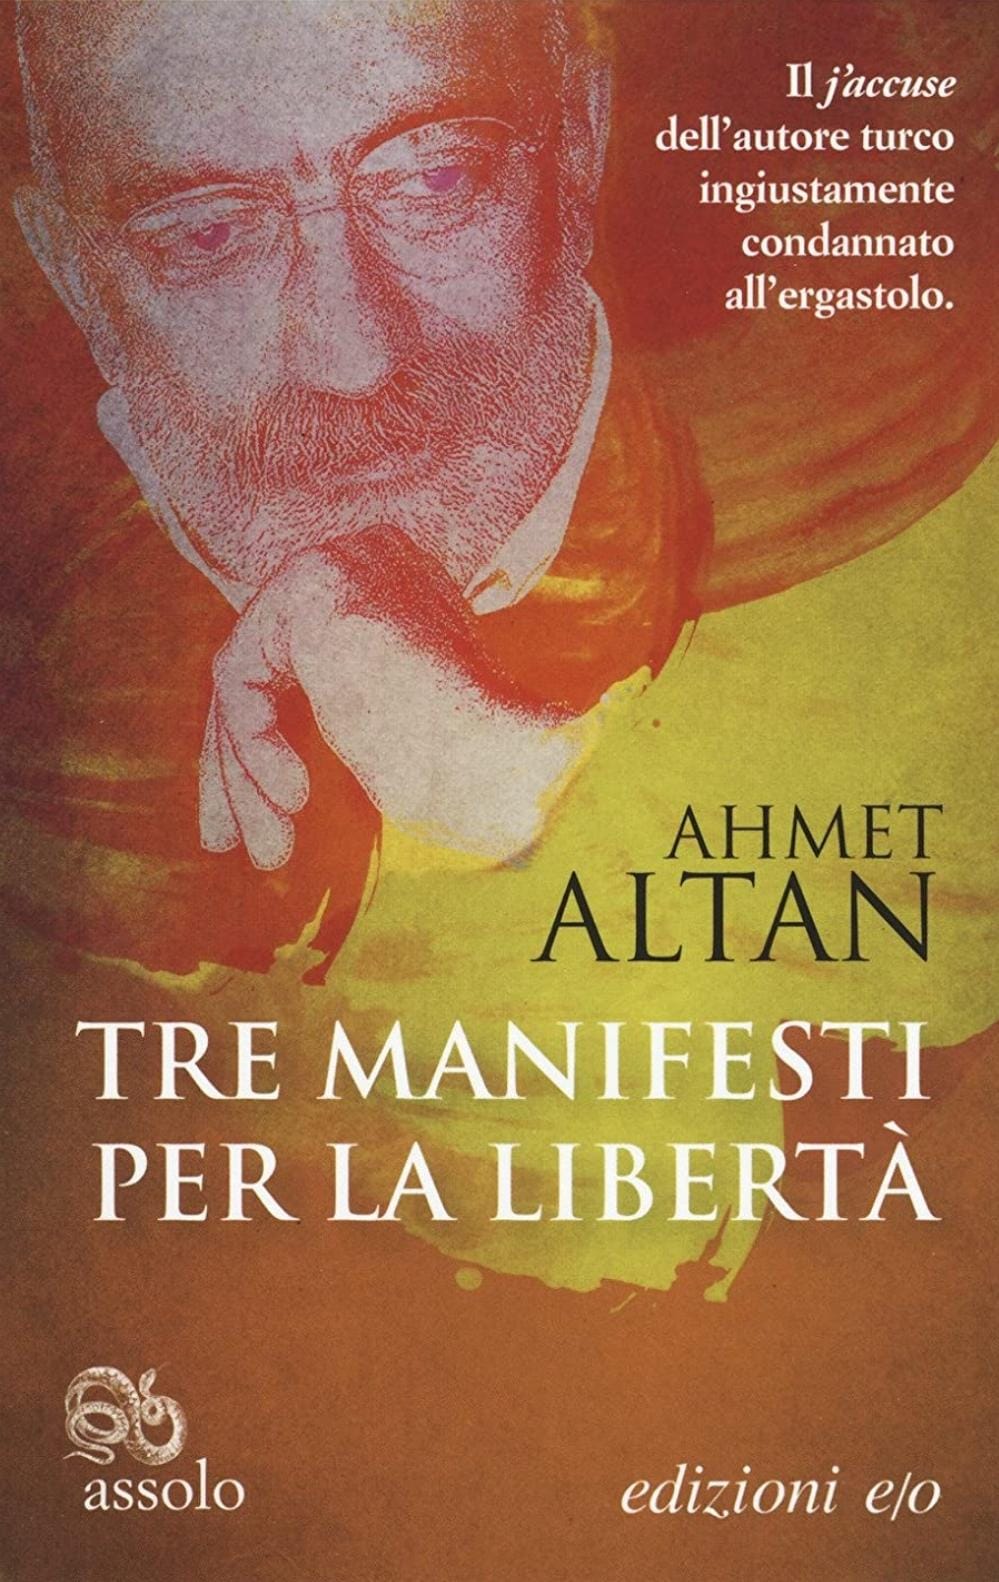 Ahmet Altan, Tre manifesti per la libertà